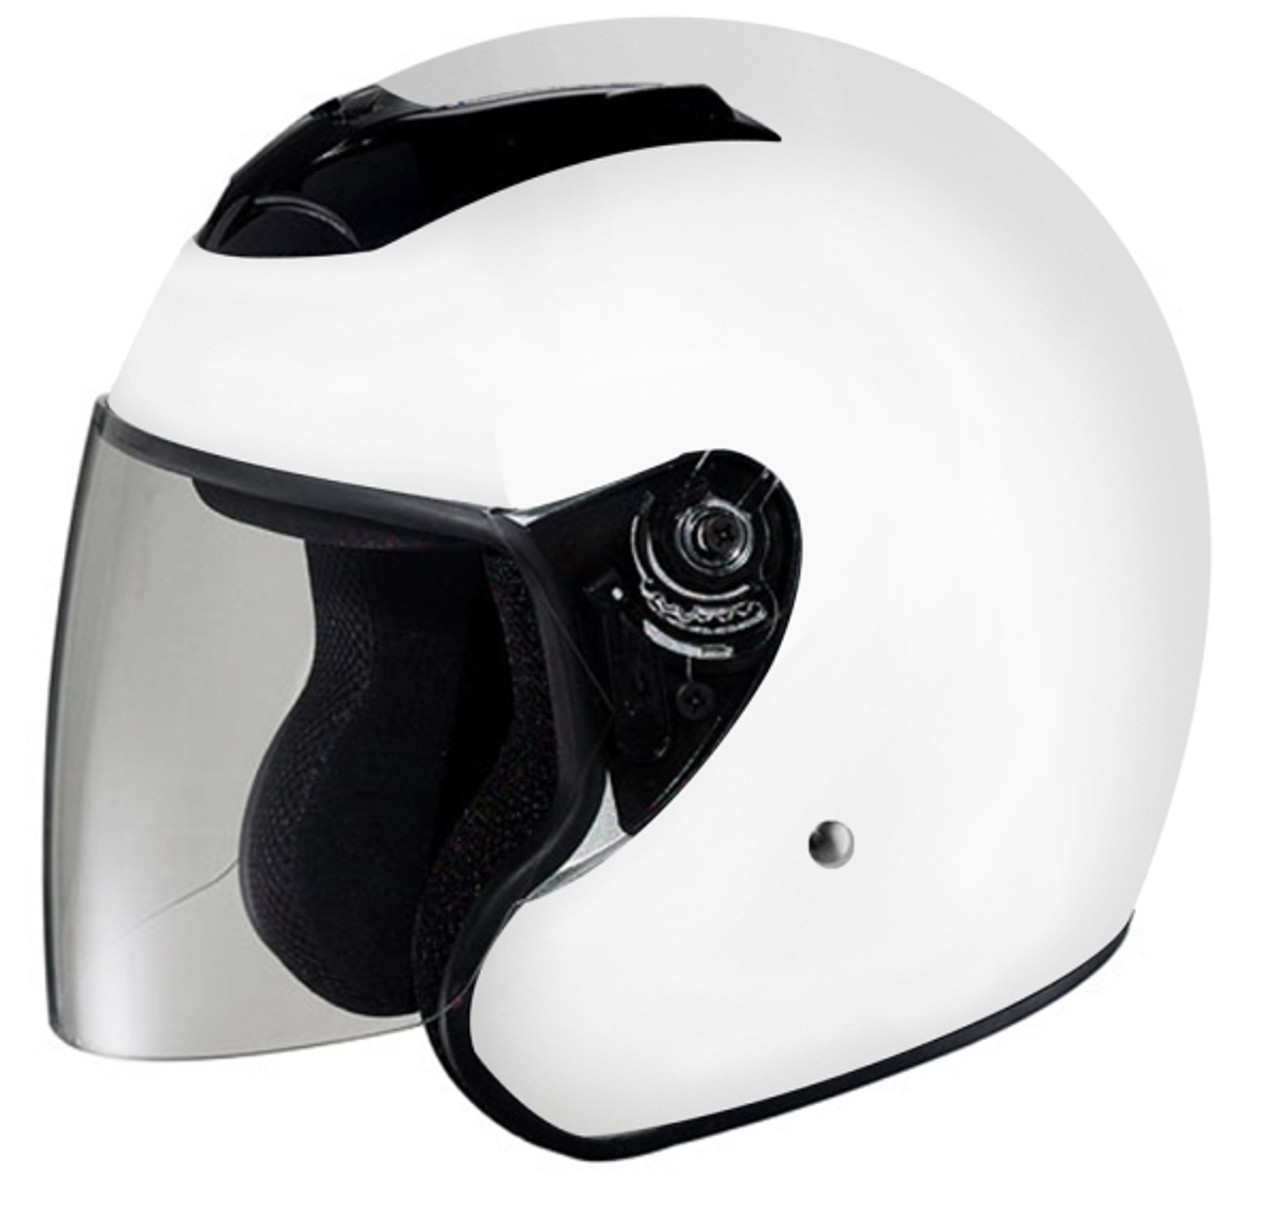 DOT ¾ Shell RK4 White Motorcycle Helmet with removable visor